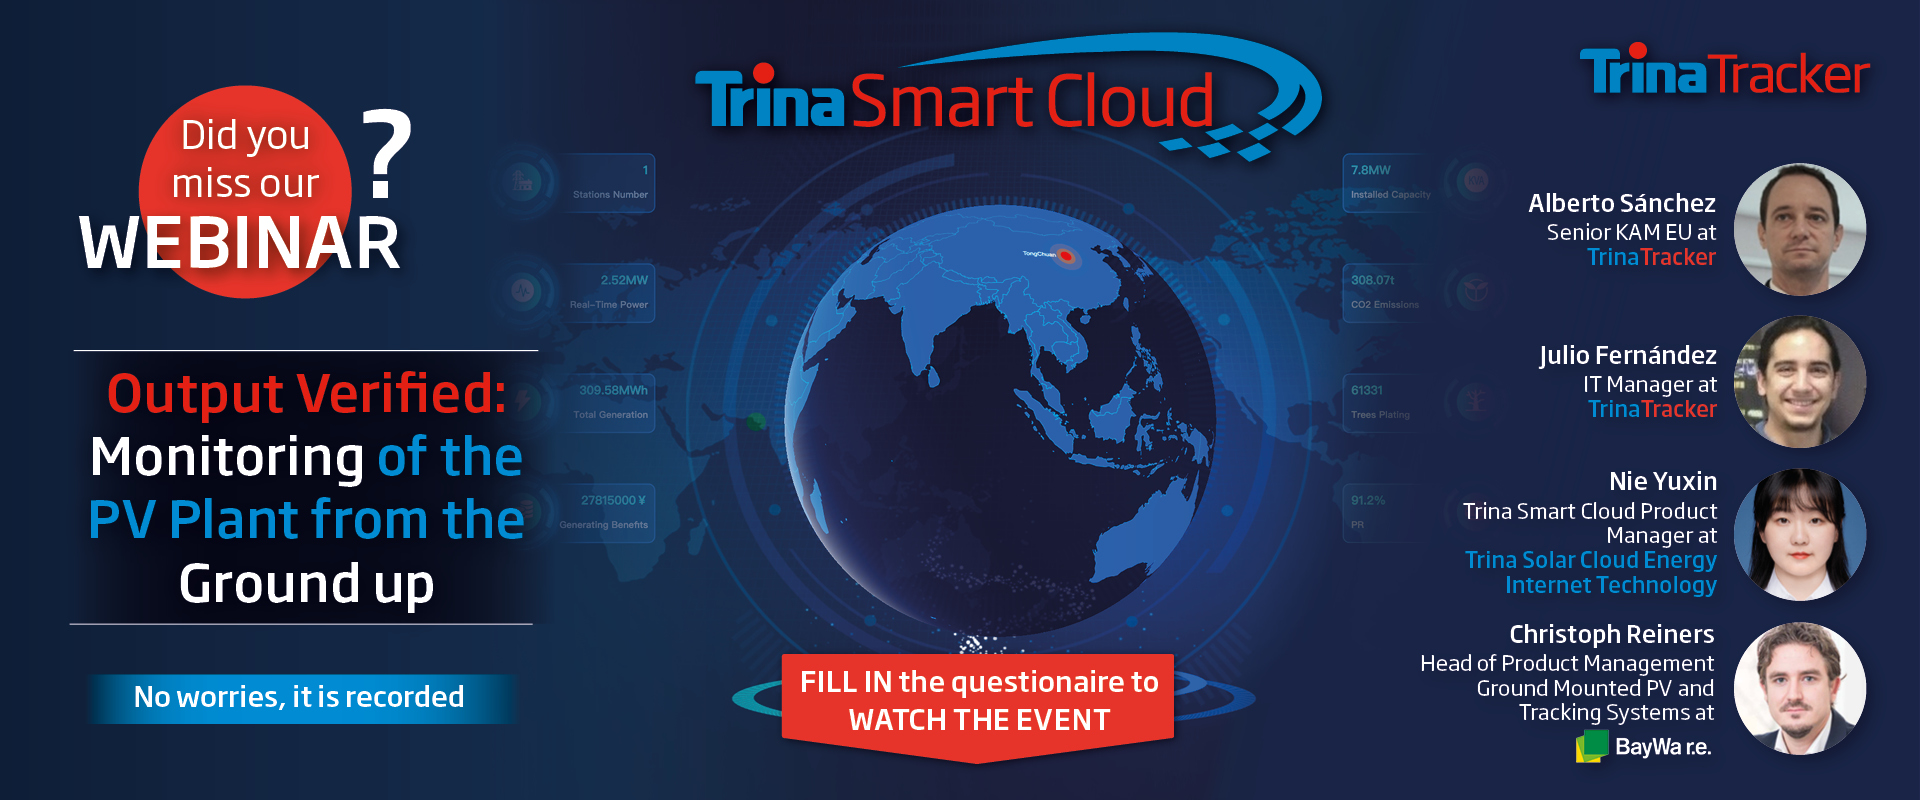 20211207 Banners Trina Smart Cloud POST WEBINAR Landingpage.jpg